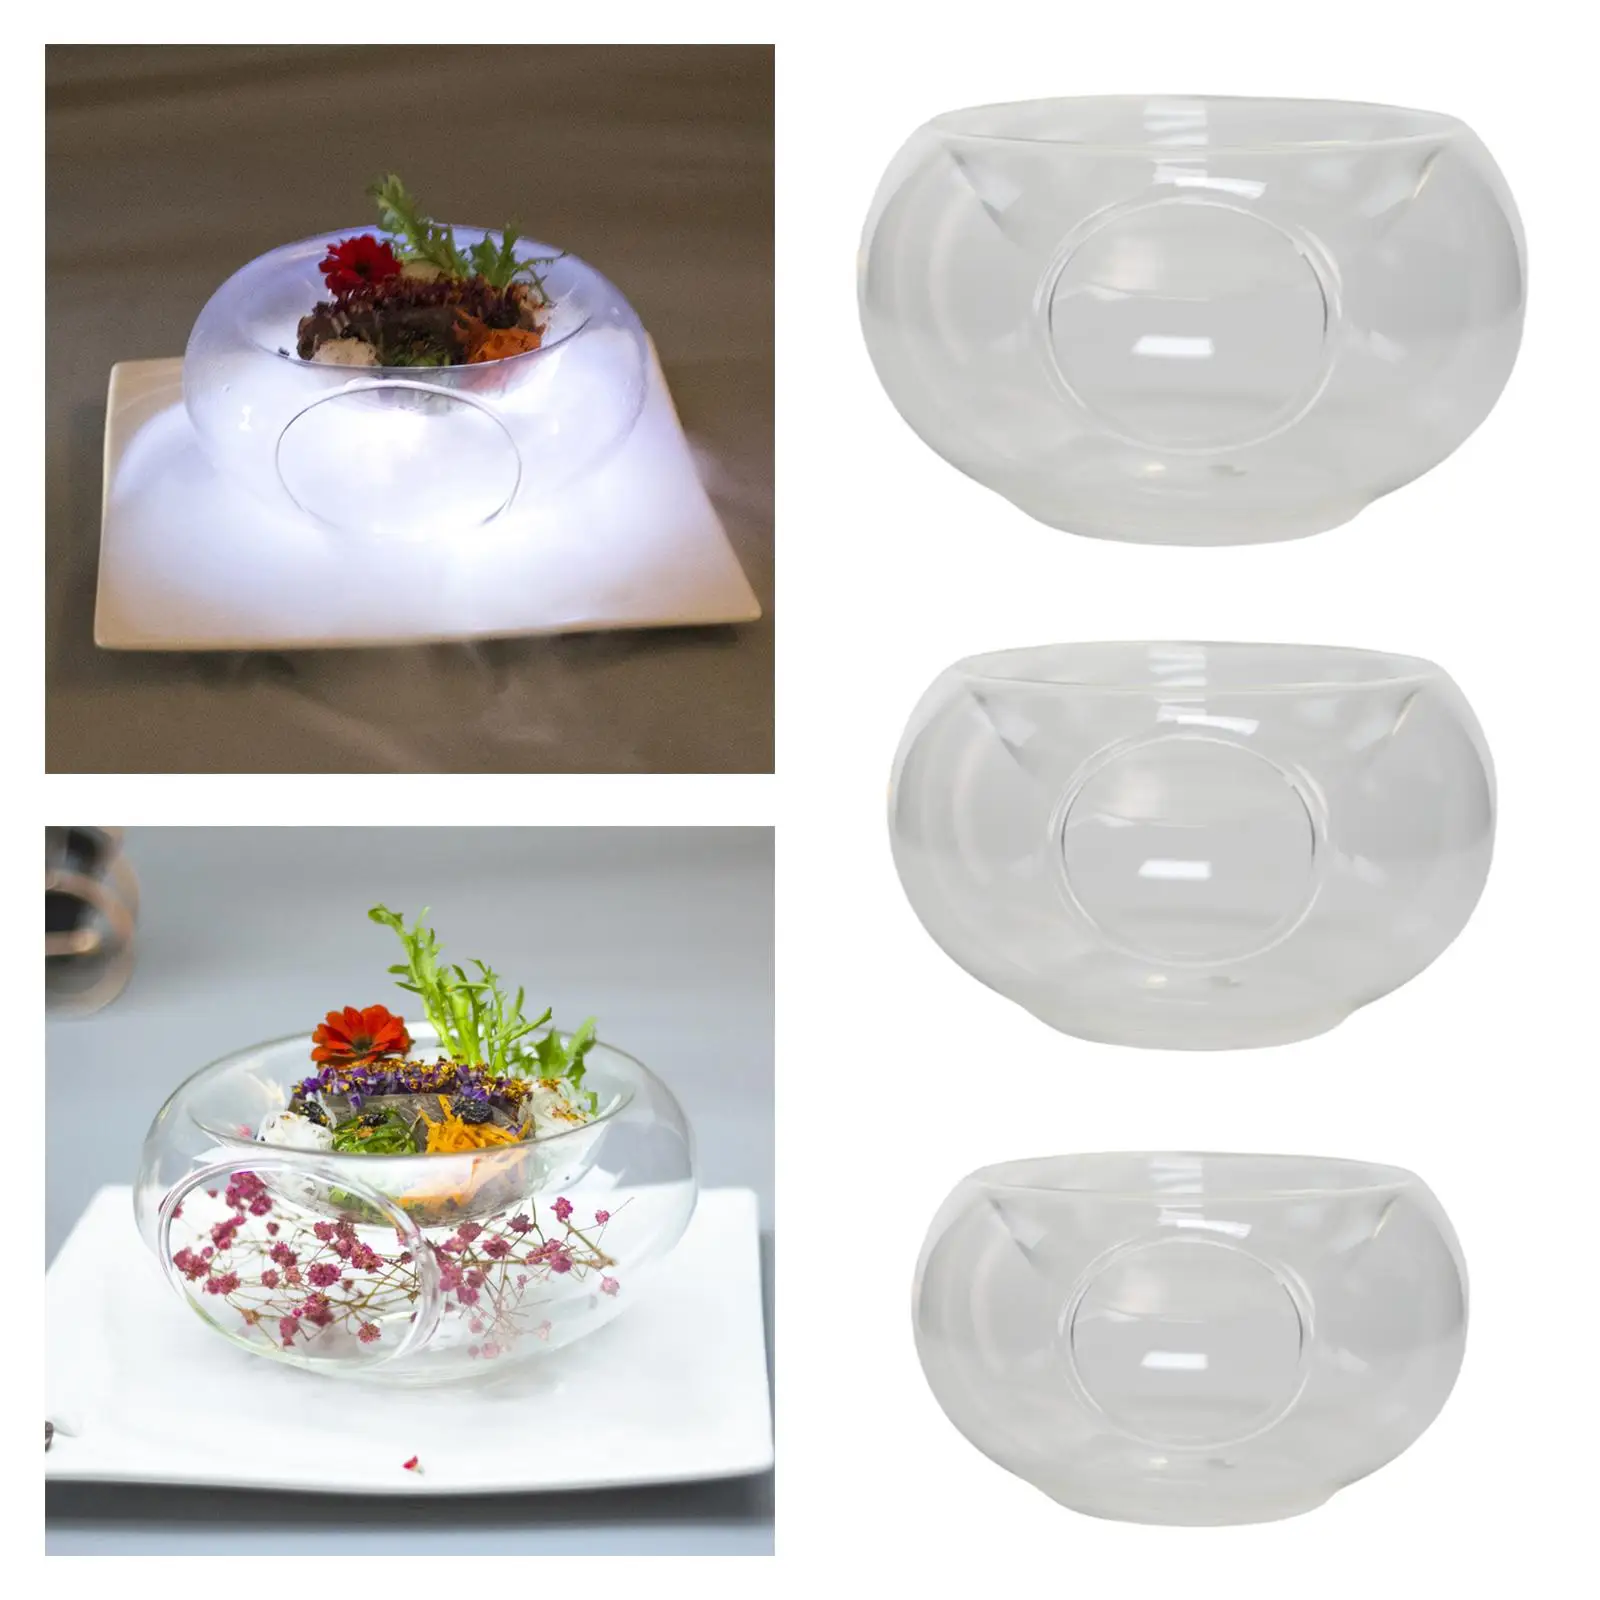  Vegetable and Fruit Salad Bowl for Dessert,Dips,Snack Dishes Kitchen